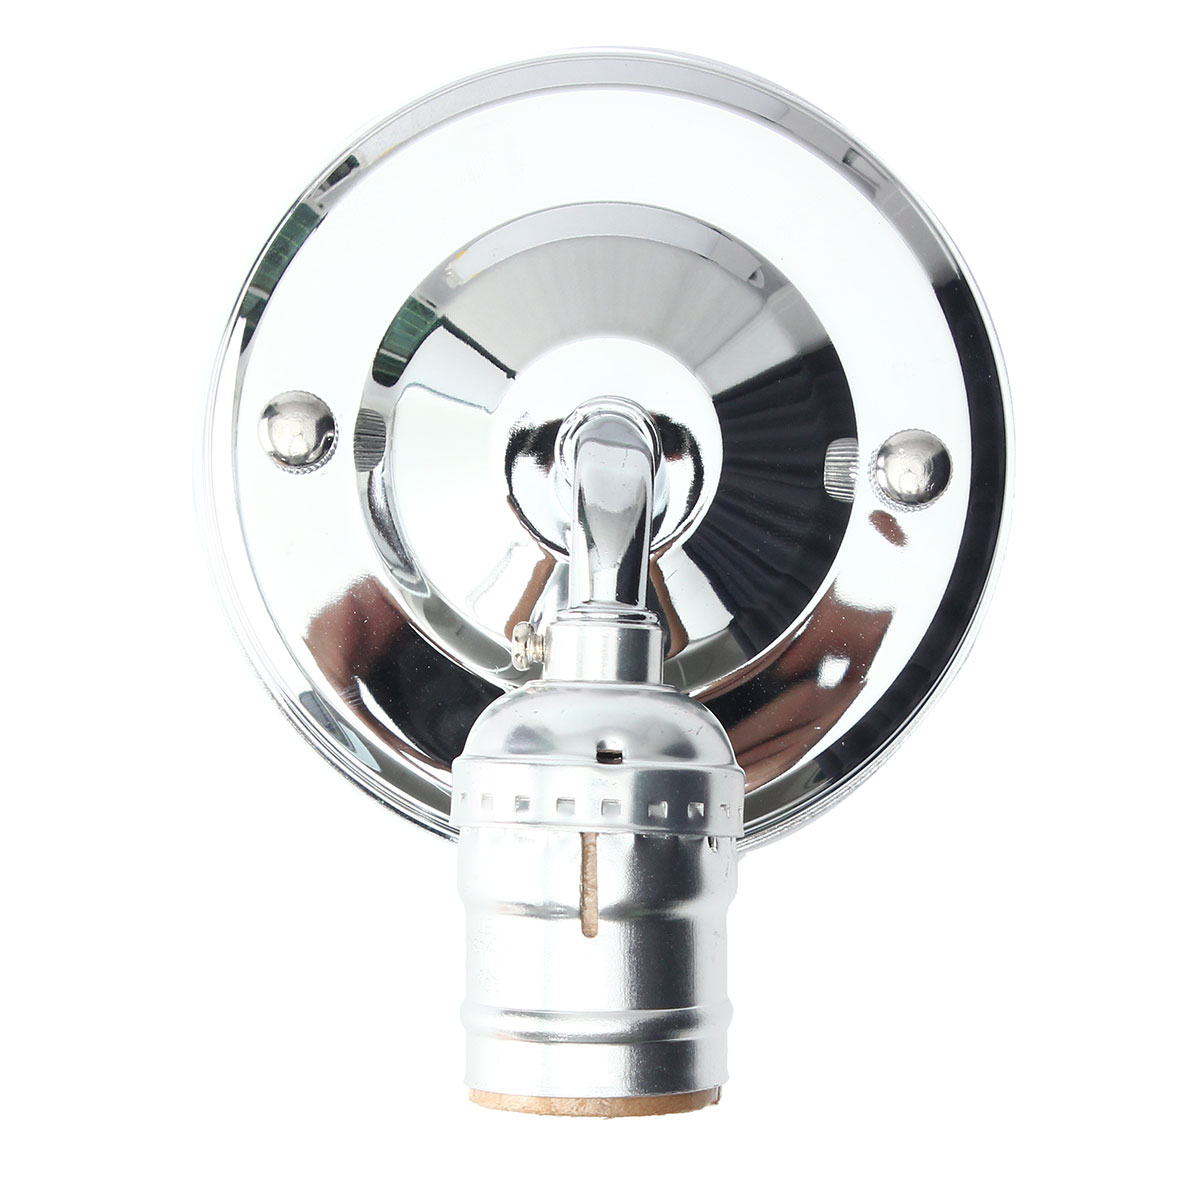 E27-Antique-Vintage-Wall-Light-Simple-Design-Sconce-Lamp-Bulb-Socket-Holder-Fixture-1077628